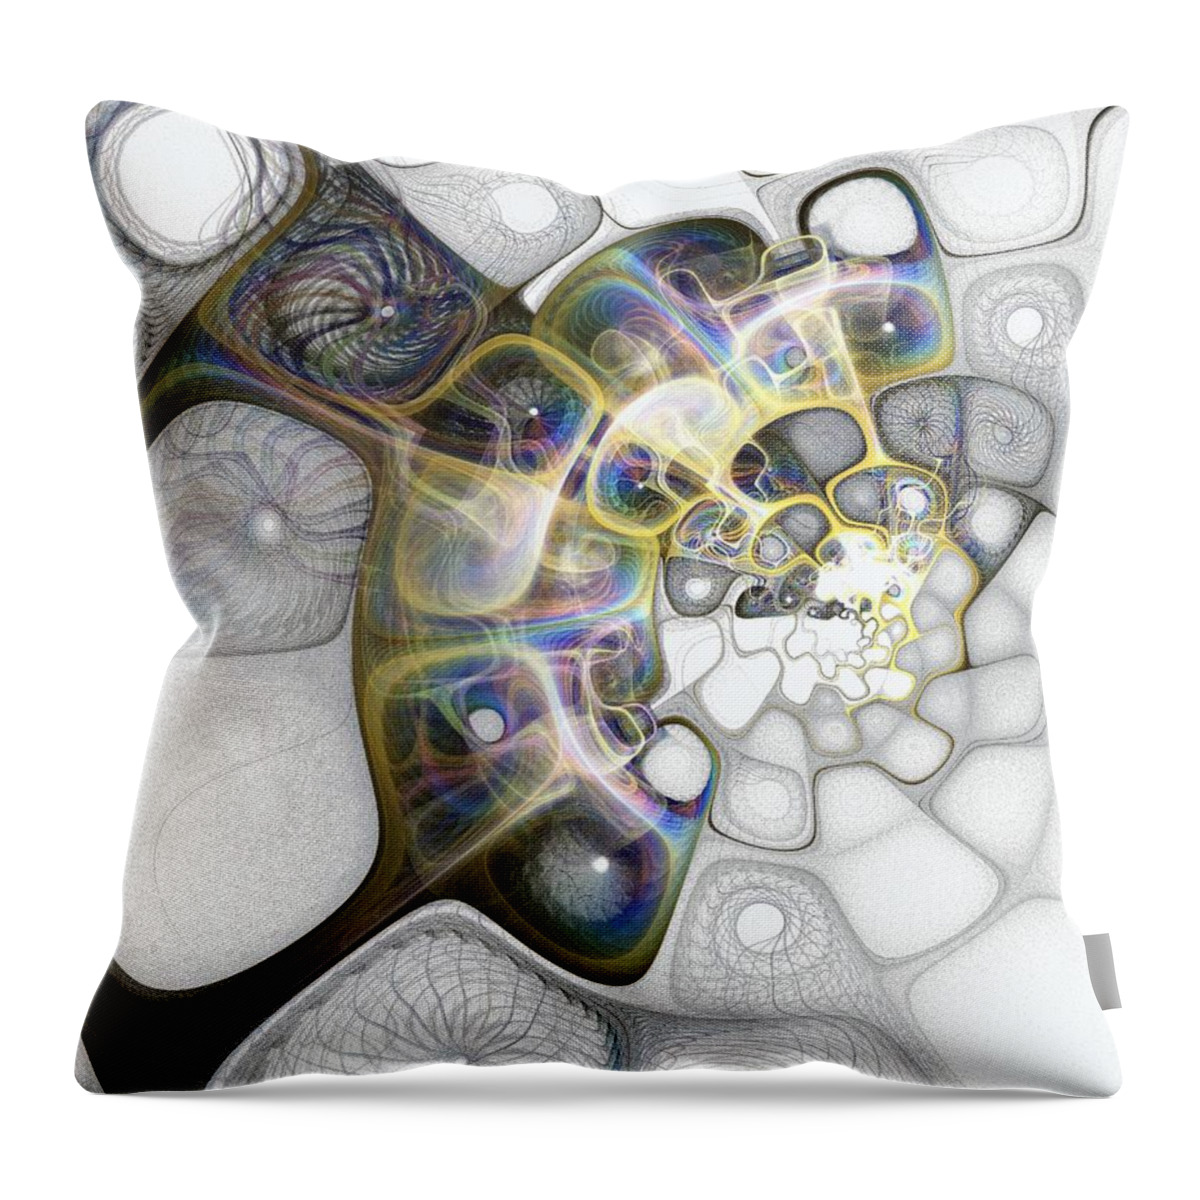 Digital Art Throw Pillow featuring the digital art Memories II by Amanda Moore